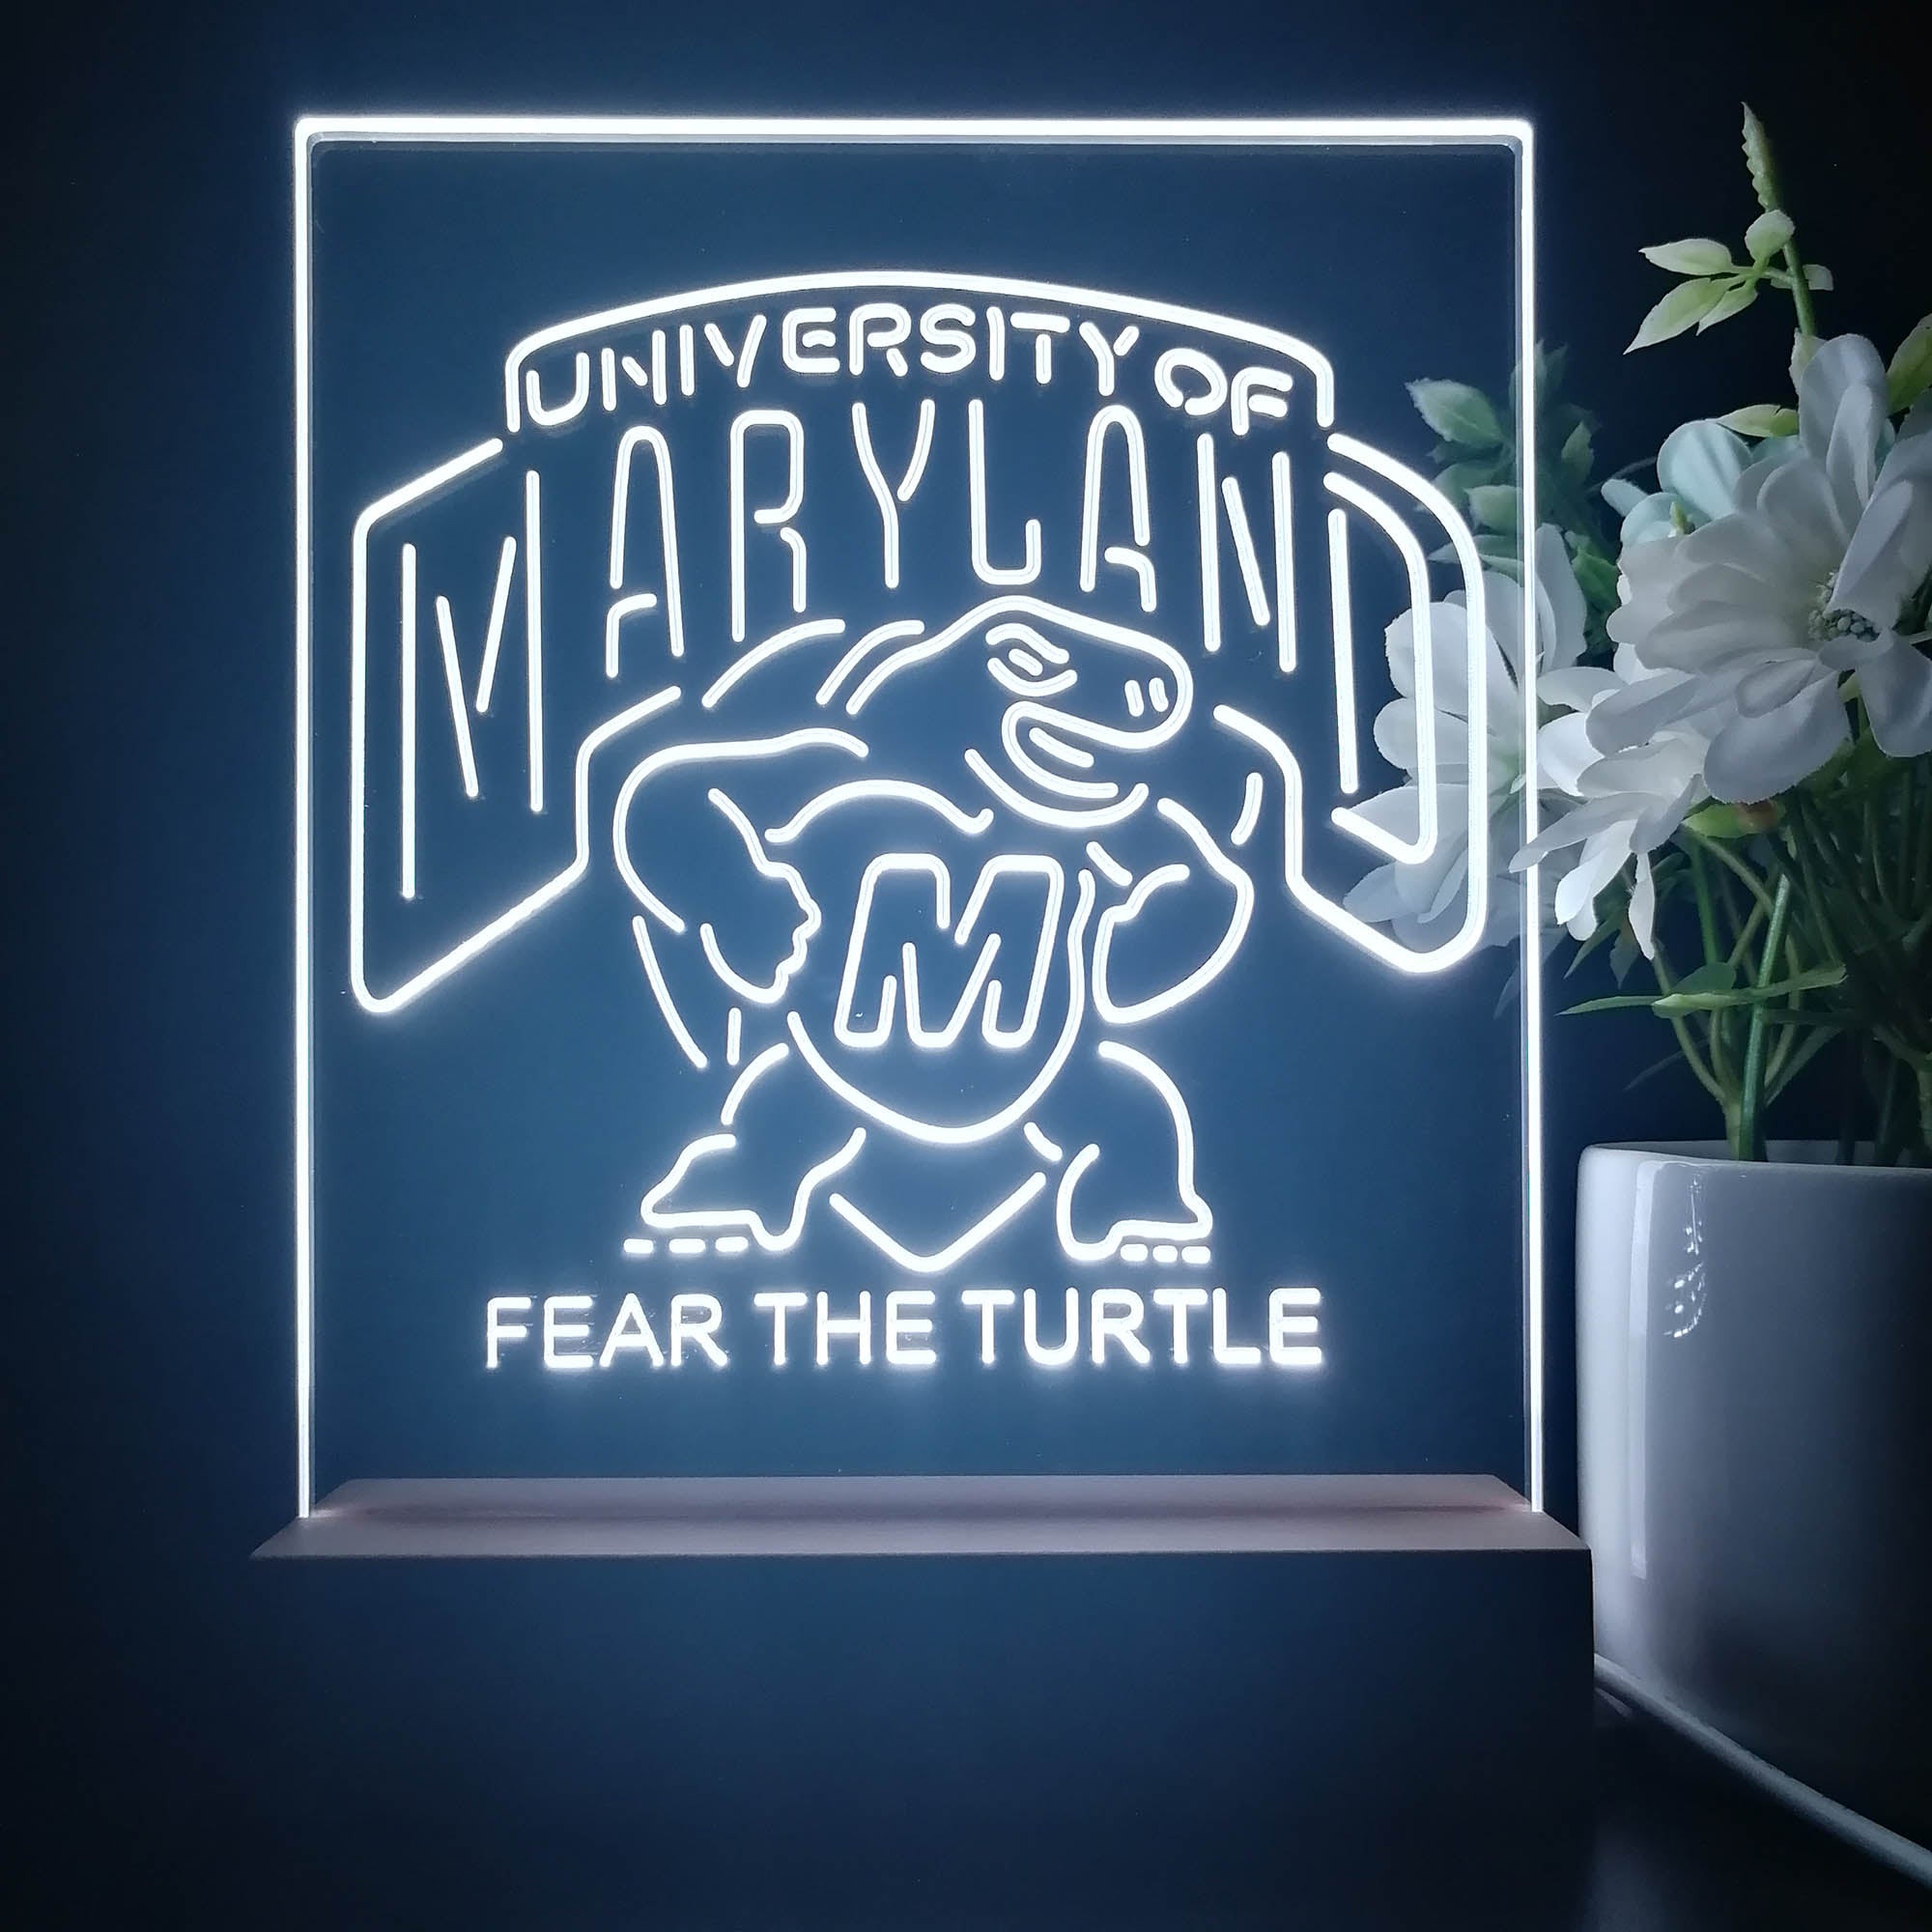 Maryland Turtle Fear The Turtle 3D Illusion Night Light Desk Lamp